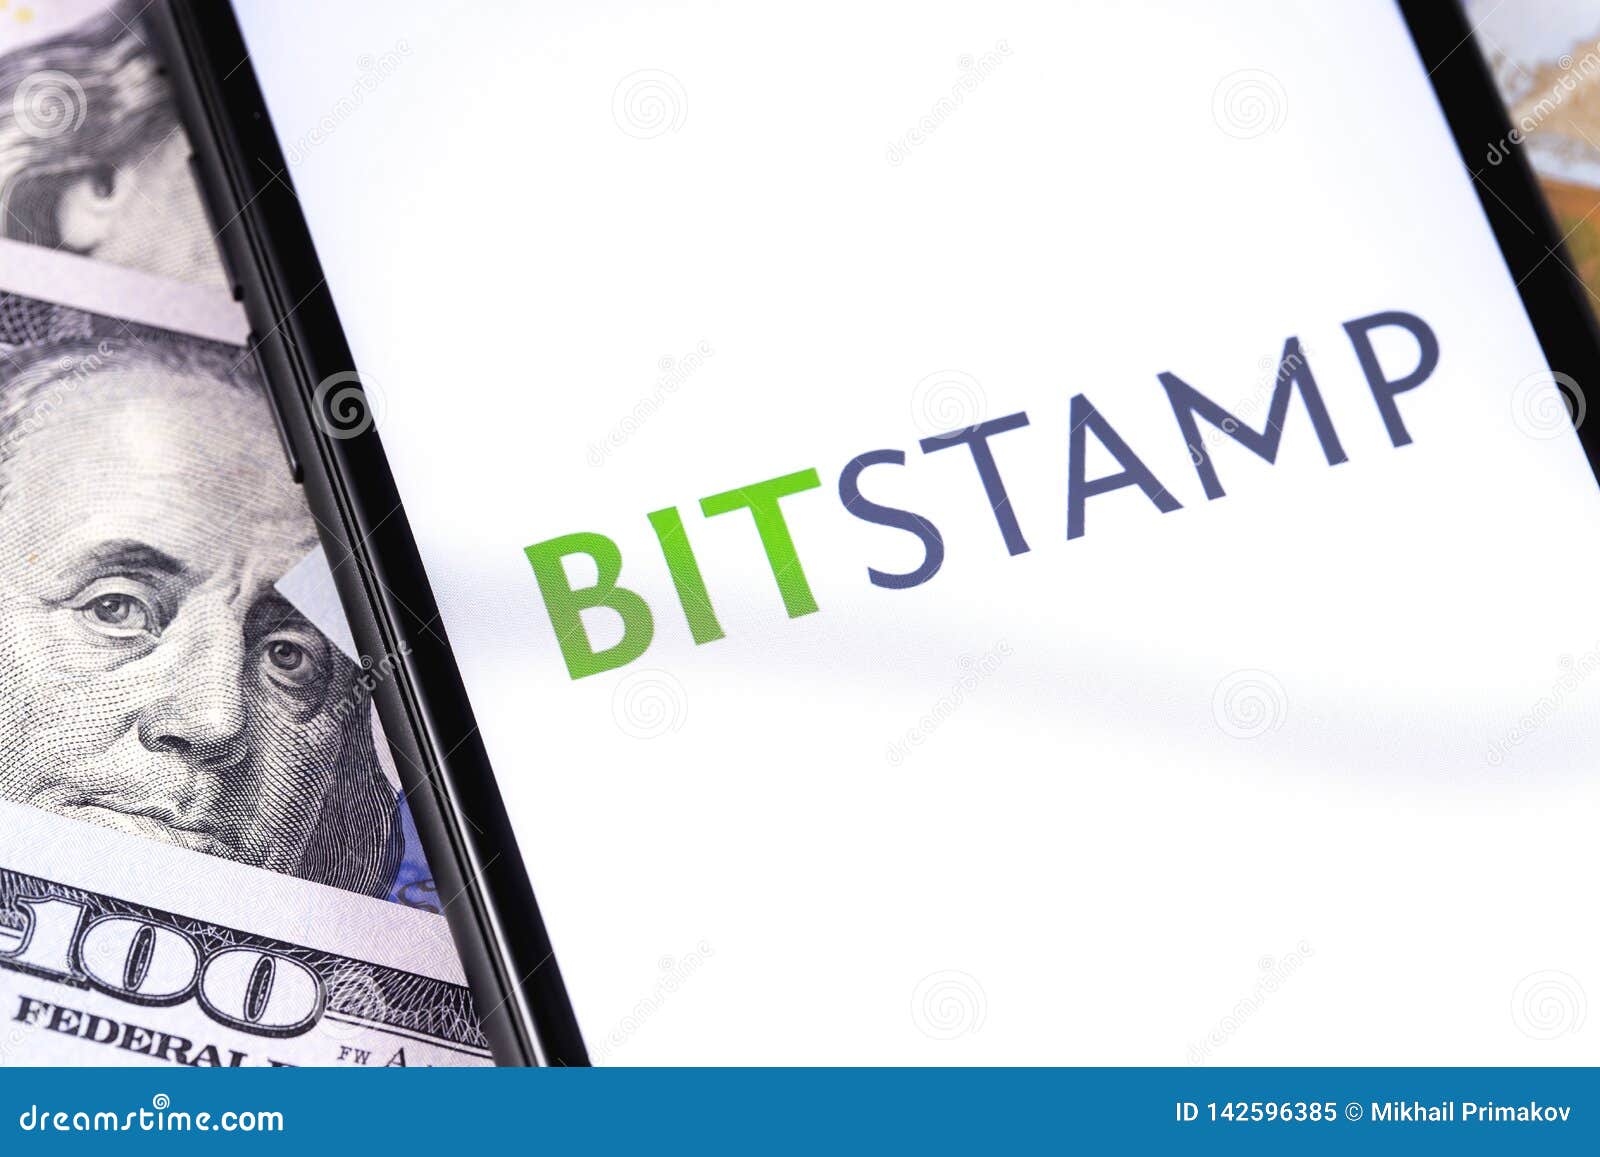 Bitstamp Cryptocurrency Exchange Editorial Image - Image ...